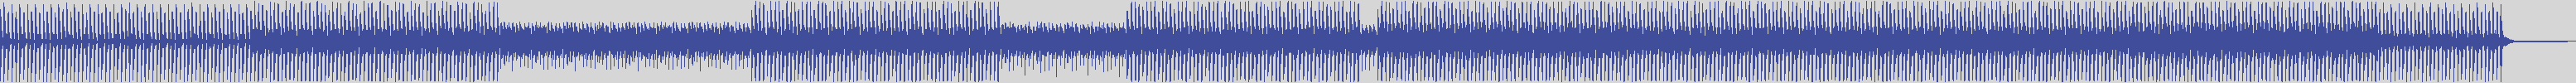 nf_boyz_records [NFY013] Dj Crooz - Best Self [Tribal Edit] audio wave form